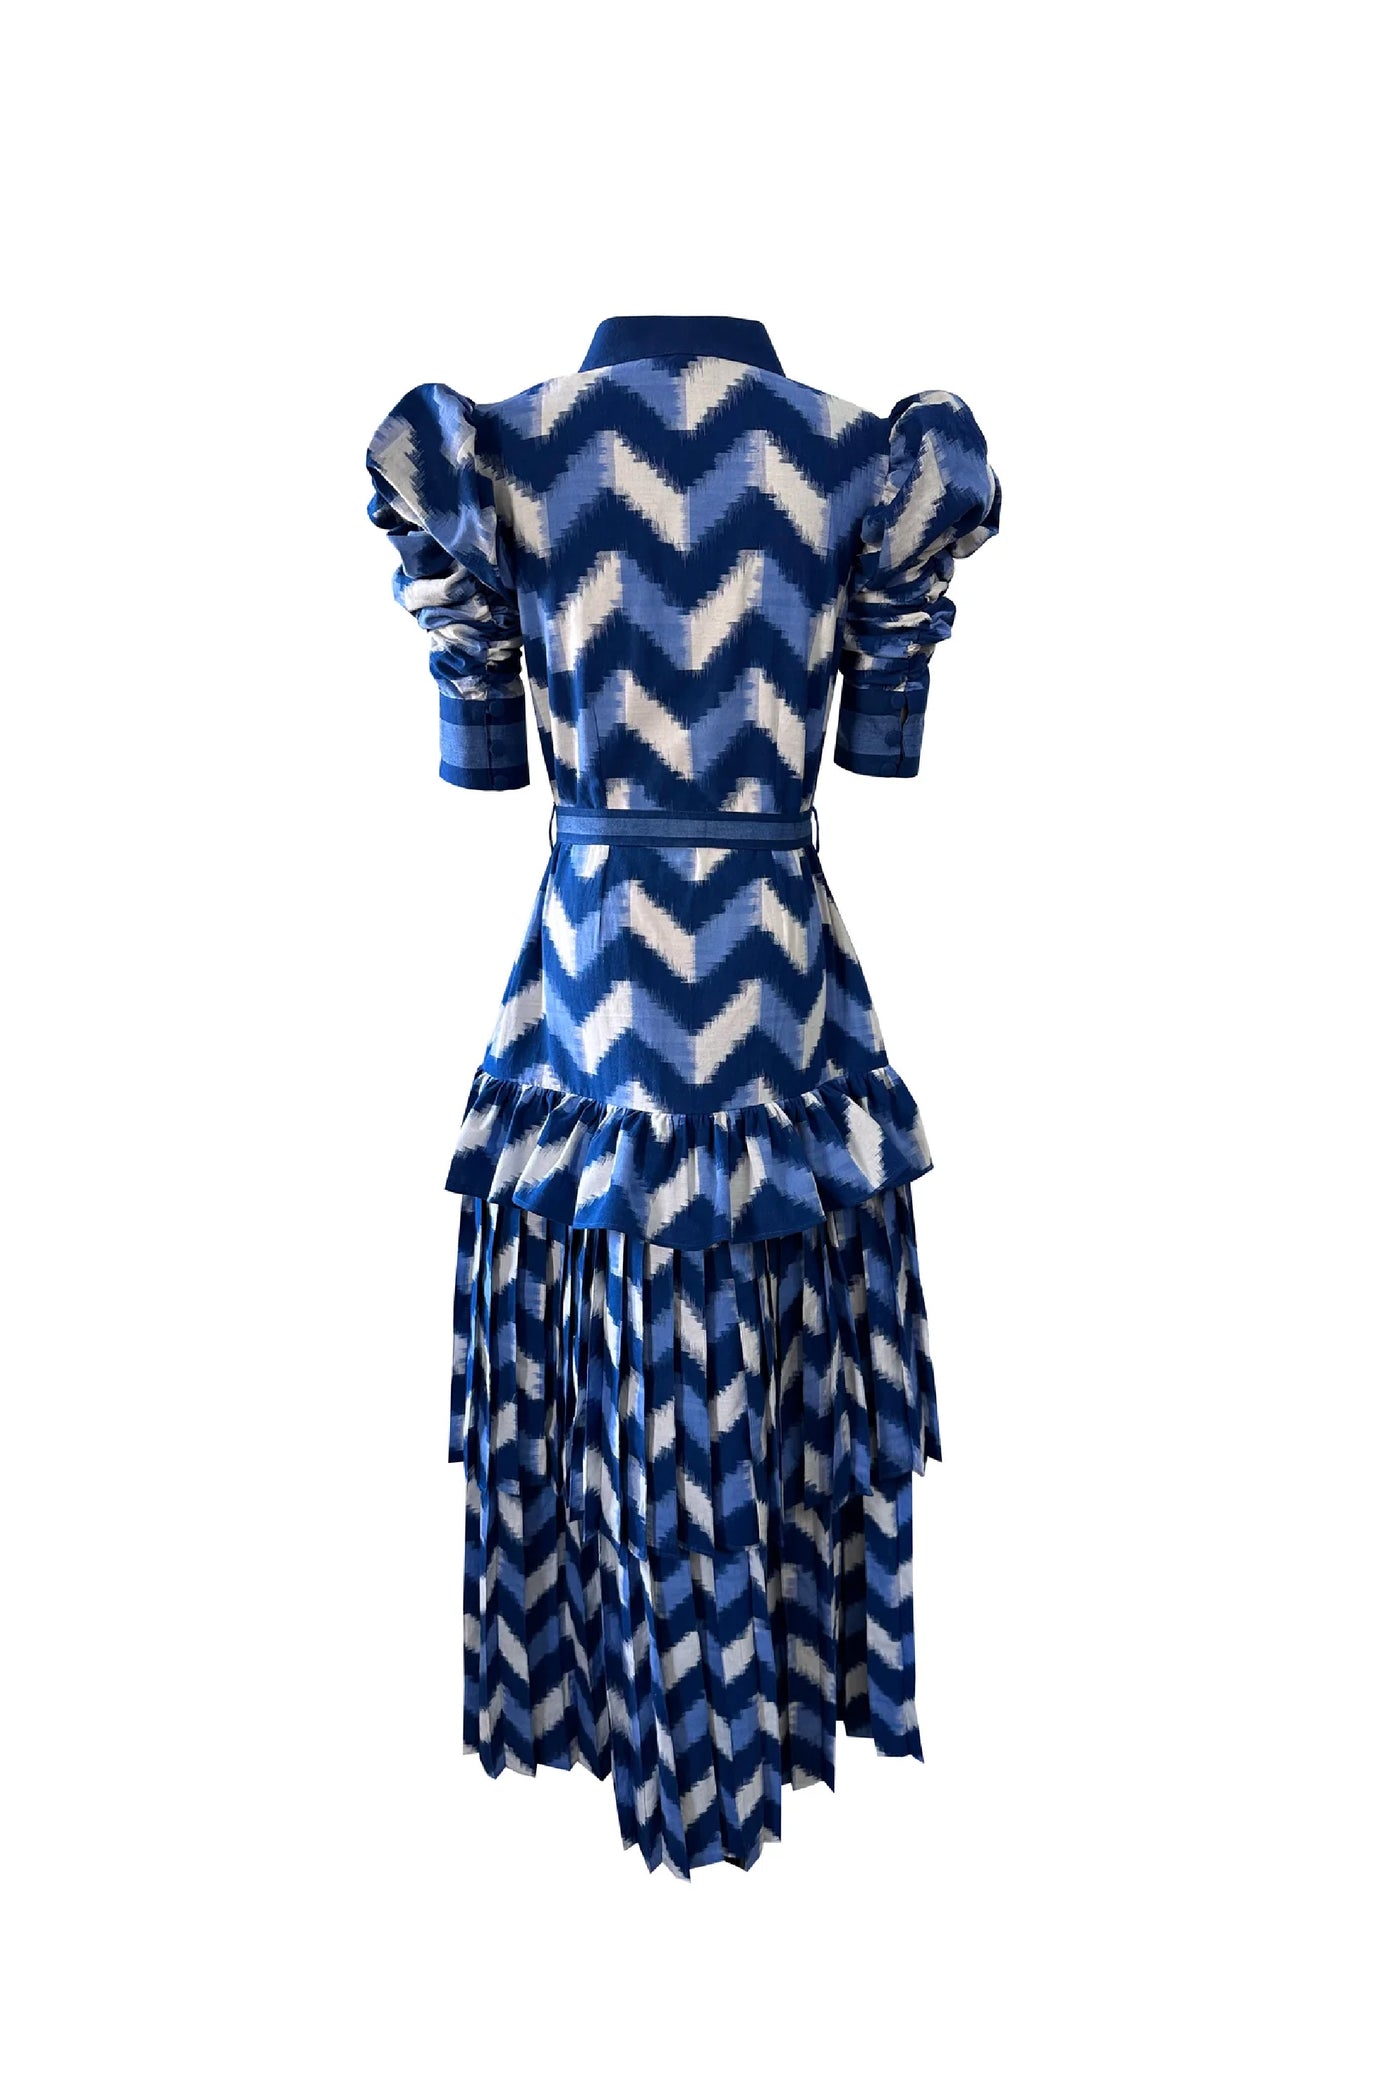 Waves Lapis Lazuli Dress